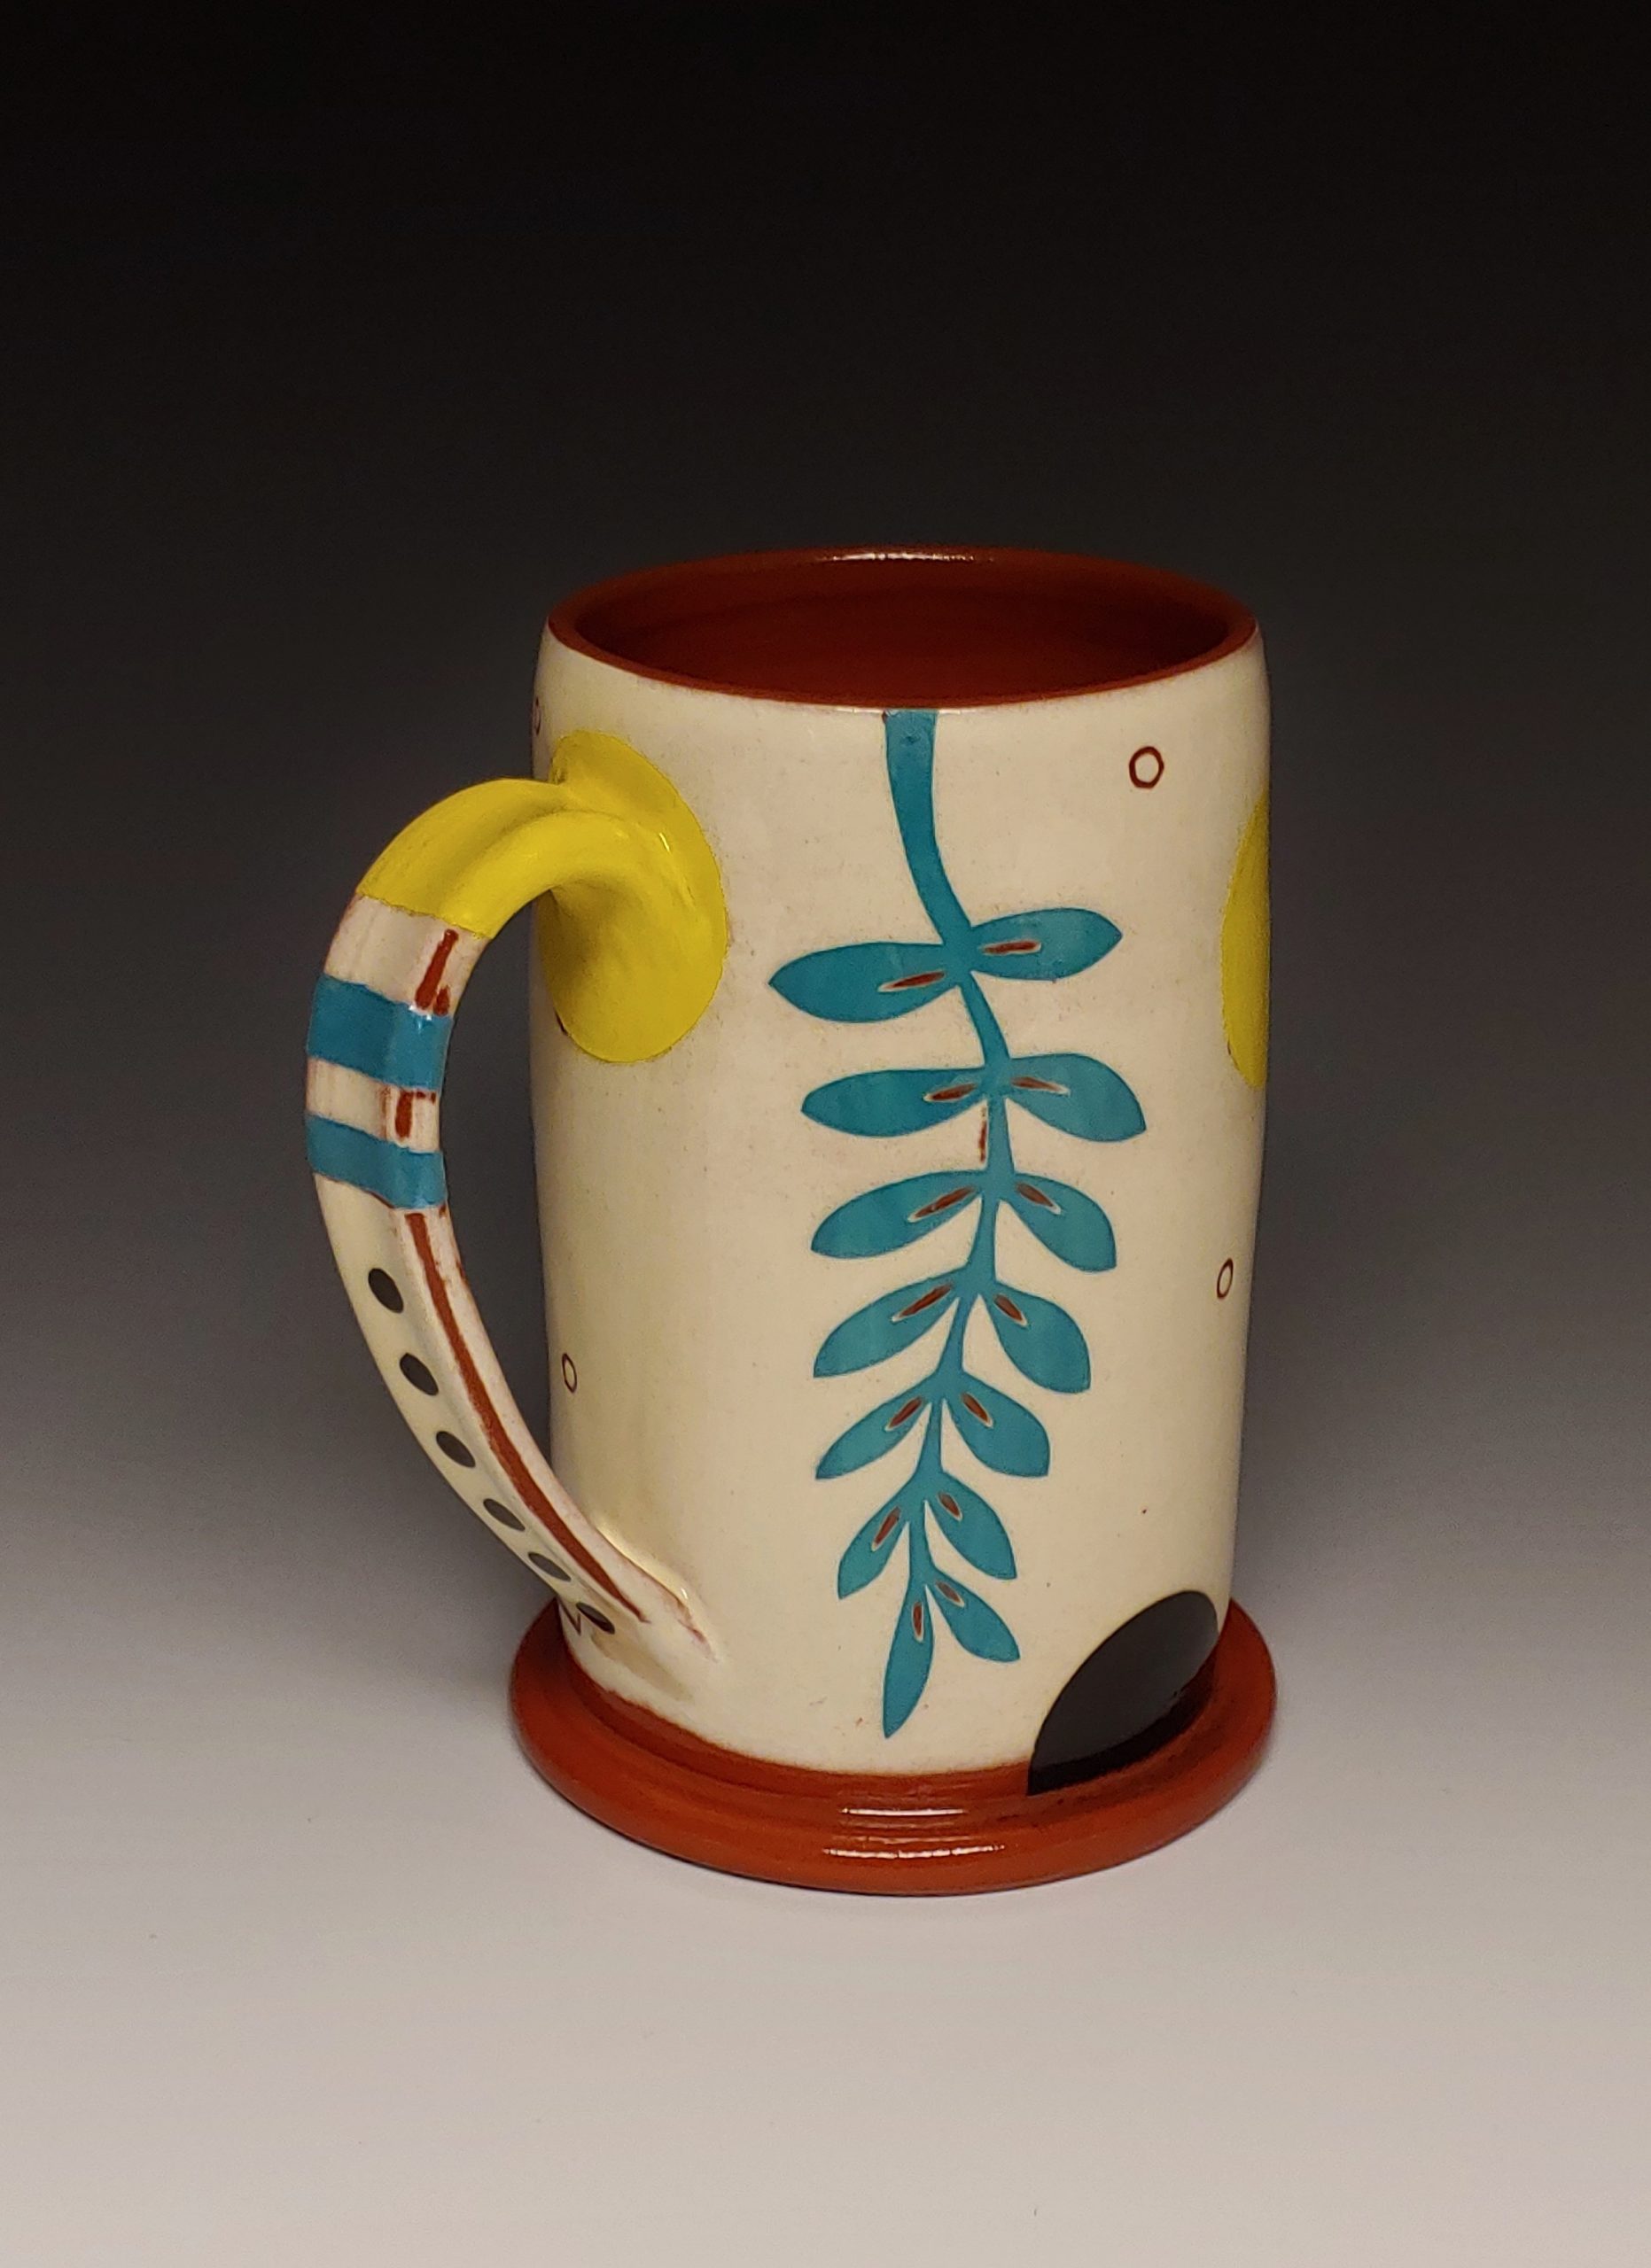 Cheerful Leafy Turquoise and Yellow Mug